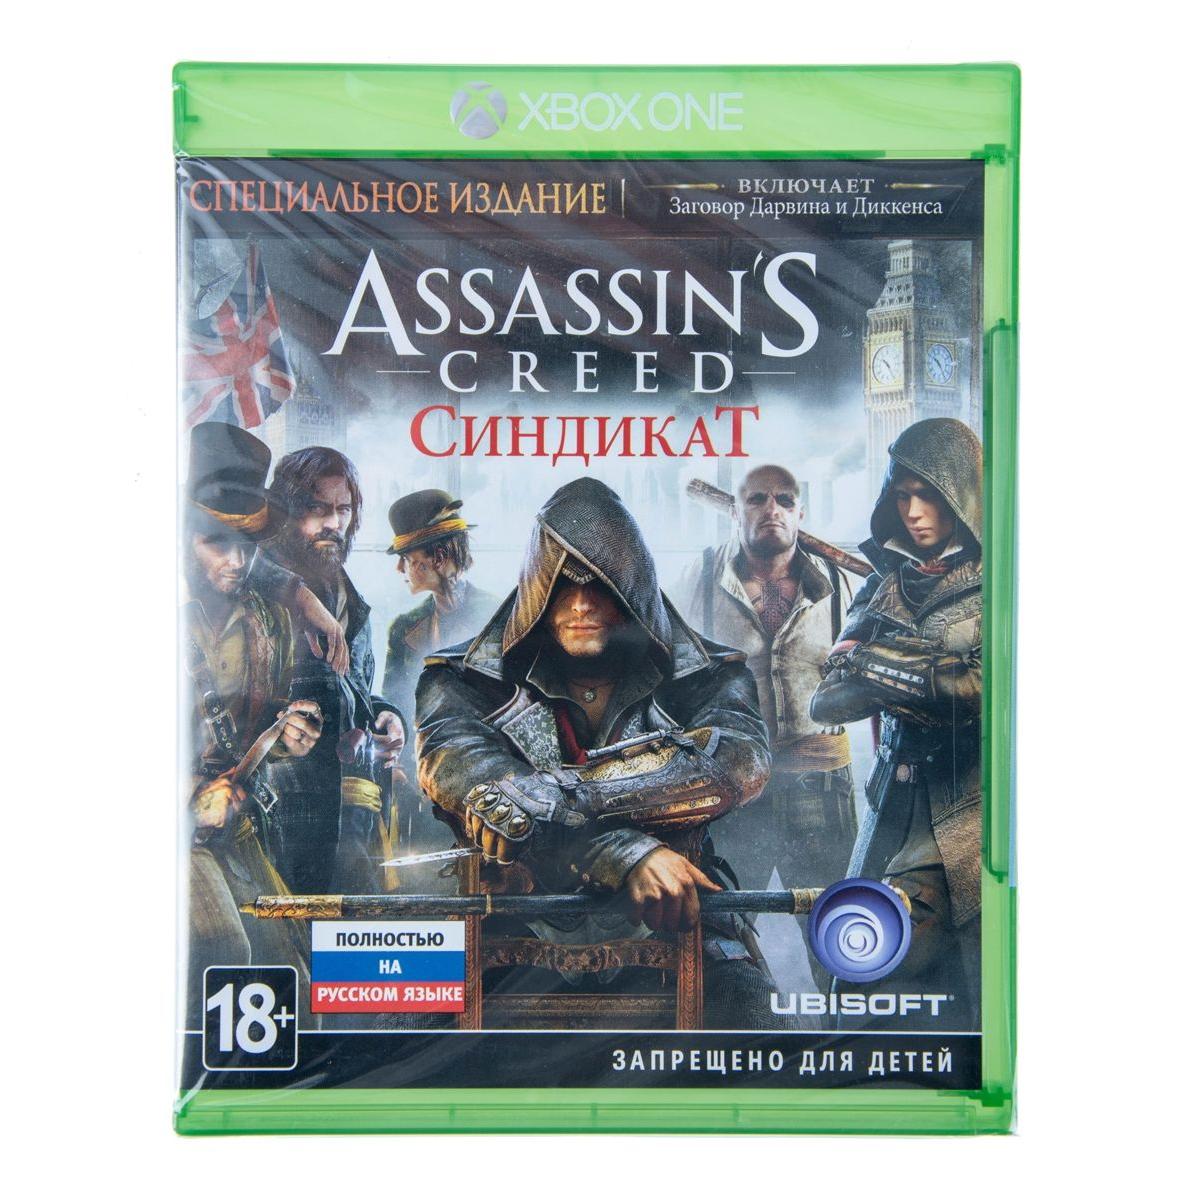 Ubisoft игры xbox. Синдикат ассасин Крид Xbox one. Assassin's Creed Syndicate Xbox one. Ассасин Крид Синдикат на Xbox 360. Игры на Xbox one Assassins Creed.